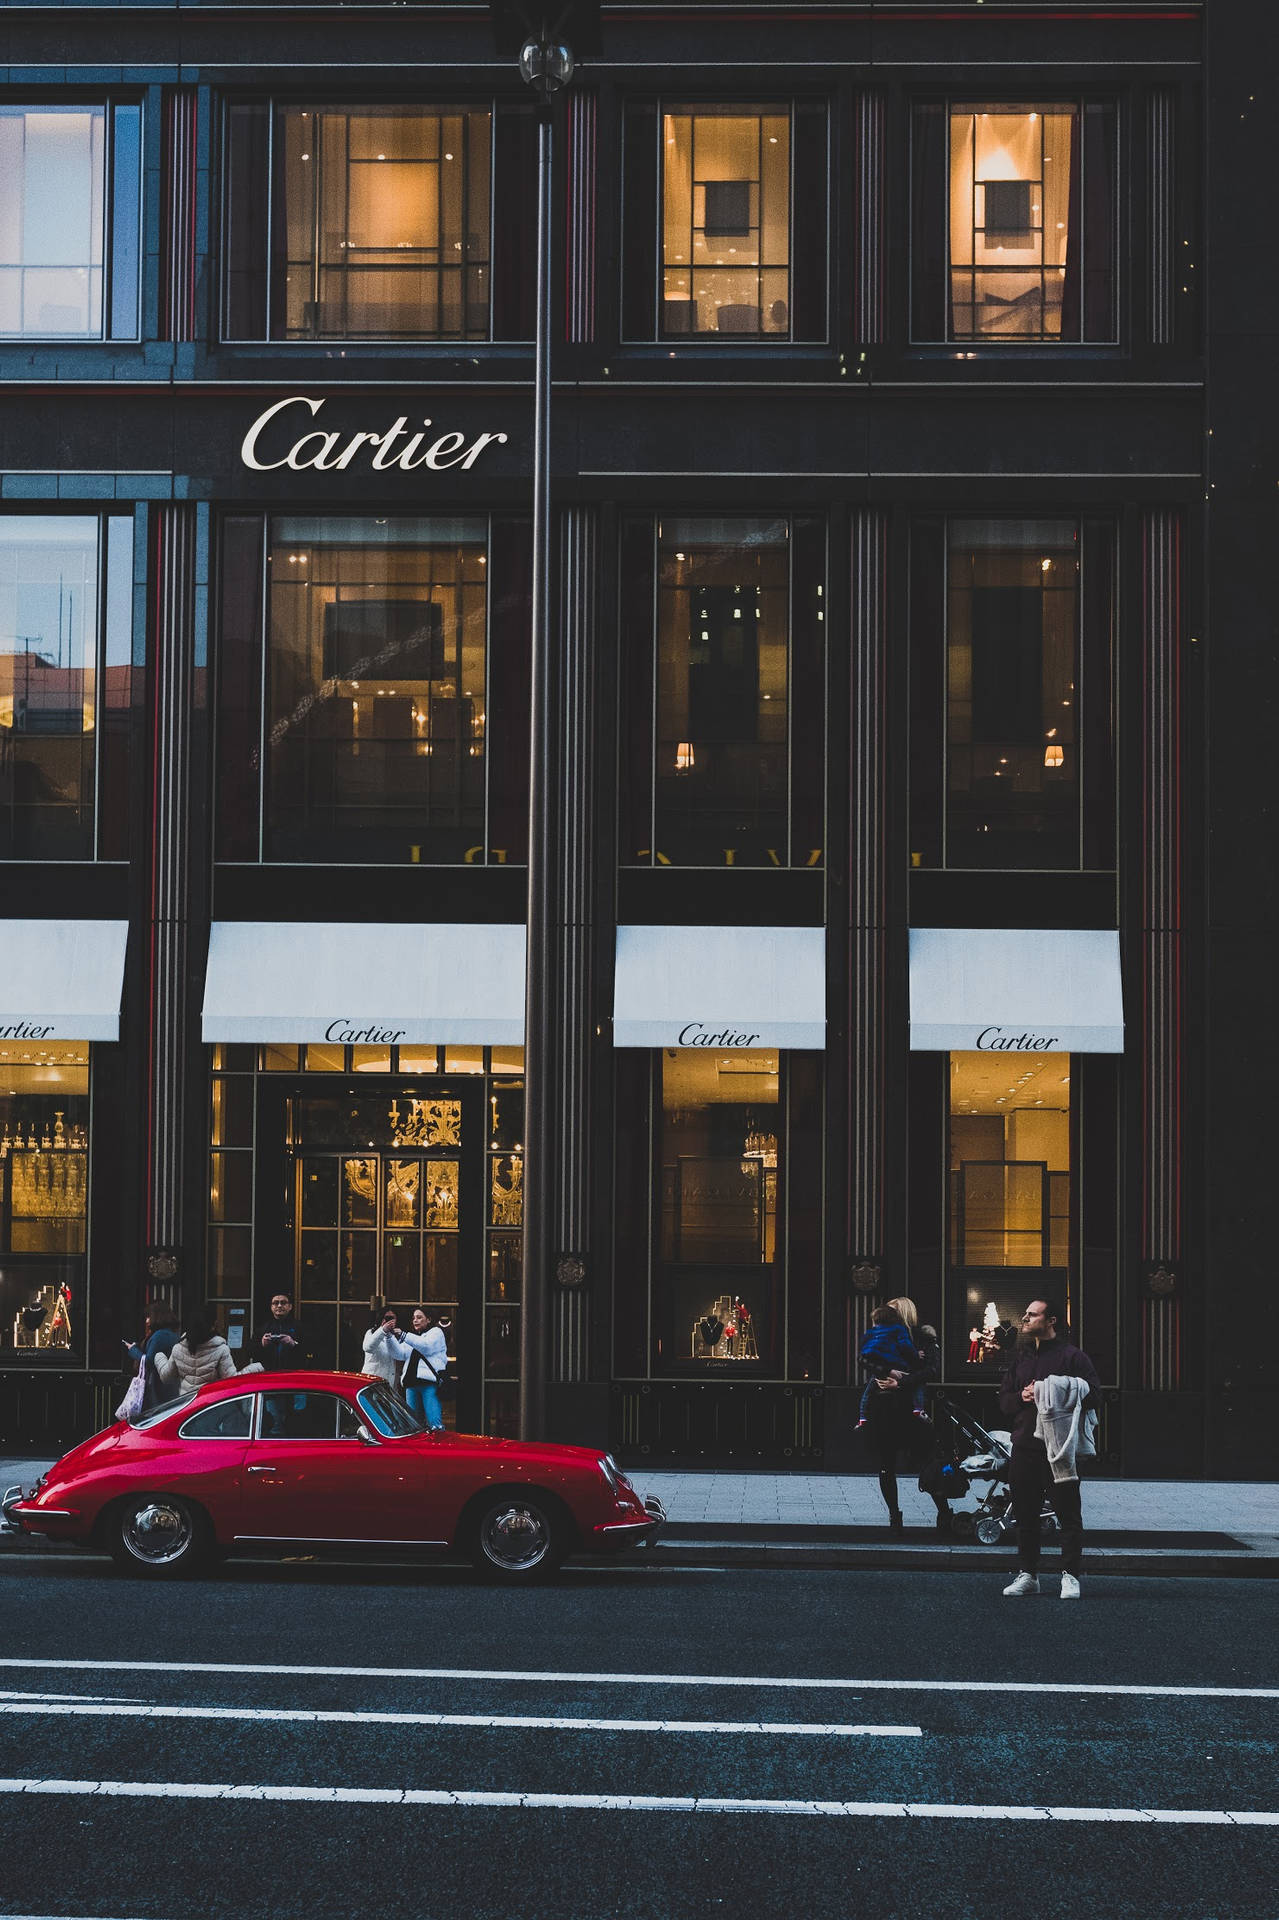 Red Luxury Car Outside Cartier Wallpaper